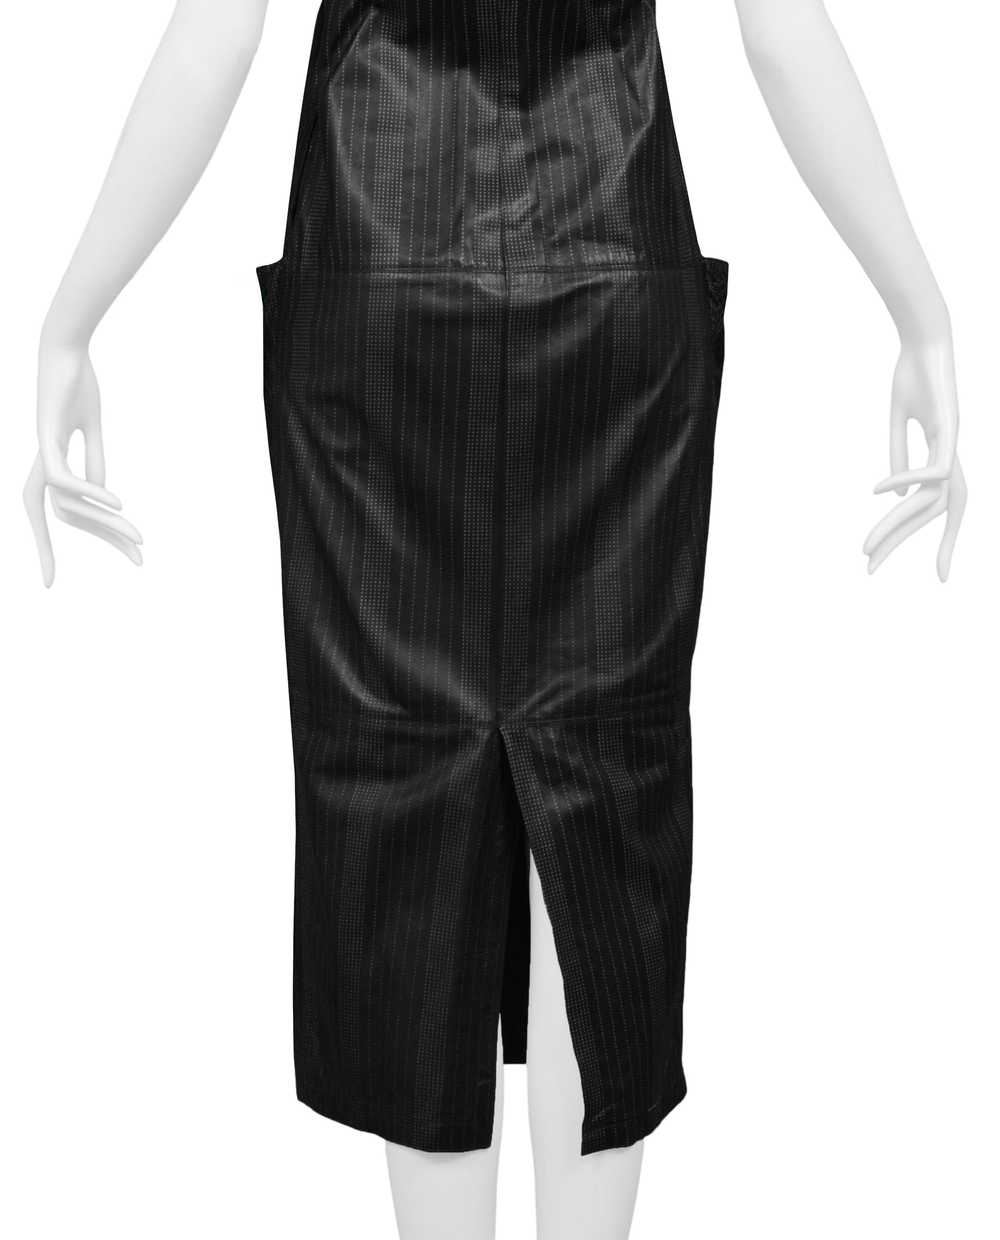 VERSACE BLACK LEATHER PINSTRIPE TANK DRESS 1990s - image 6